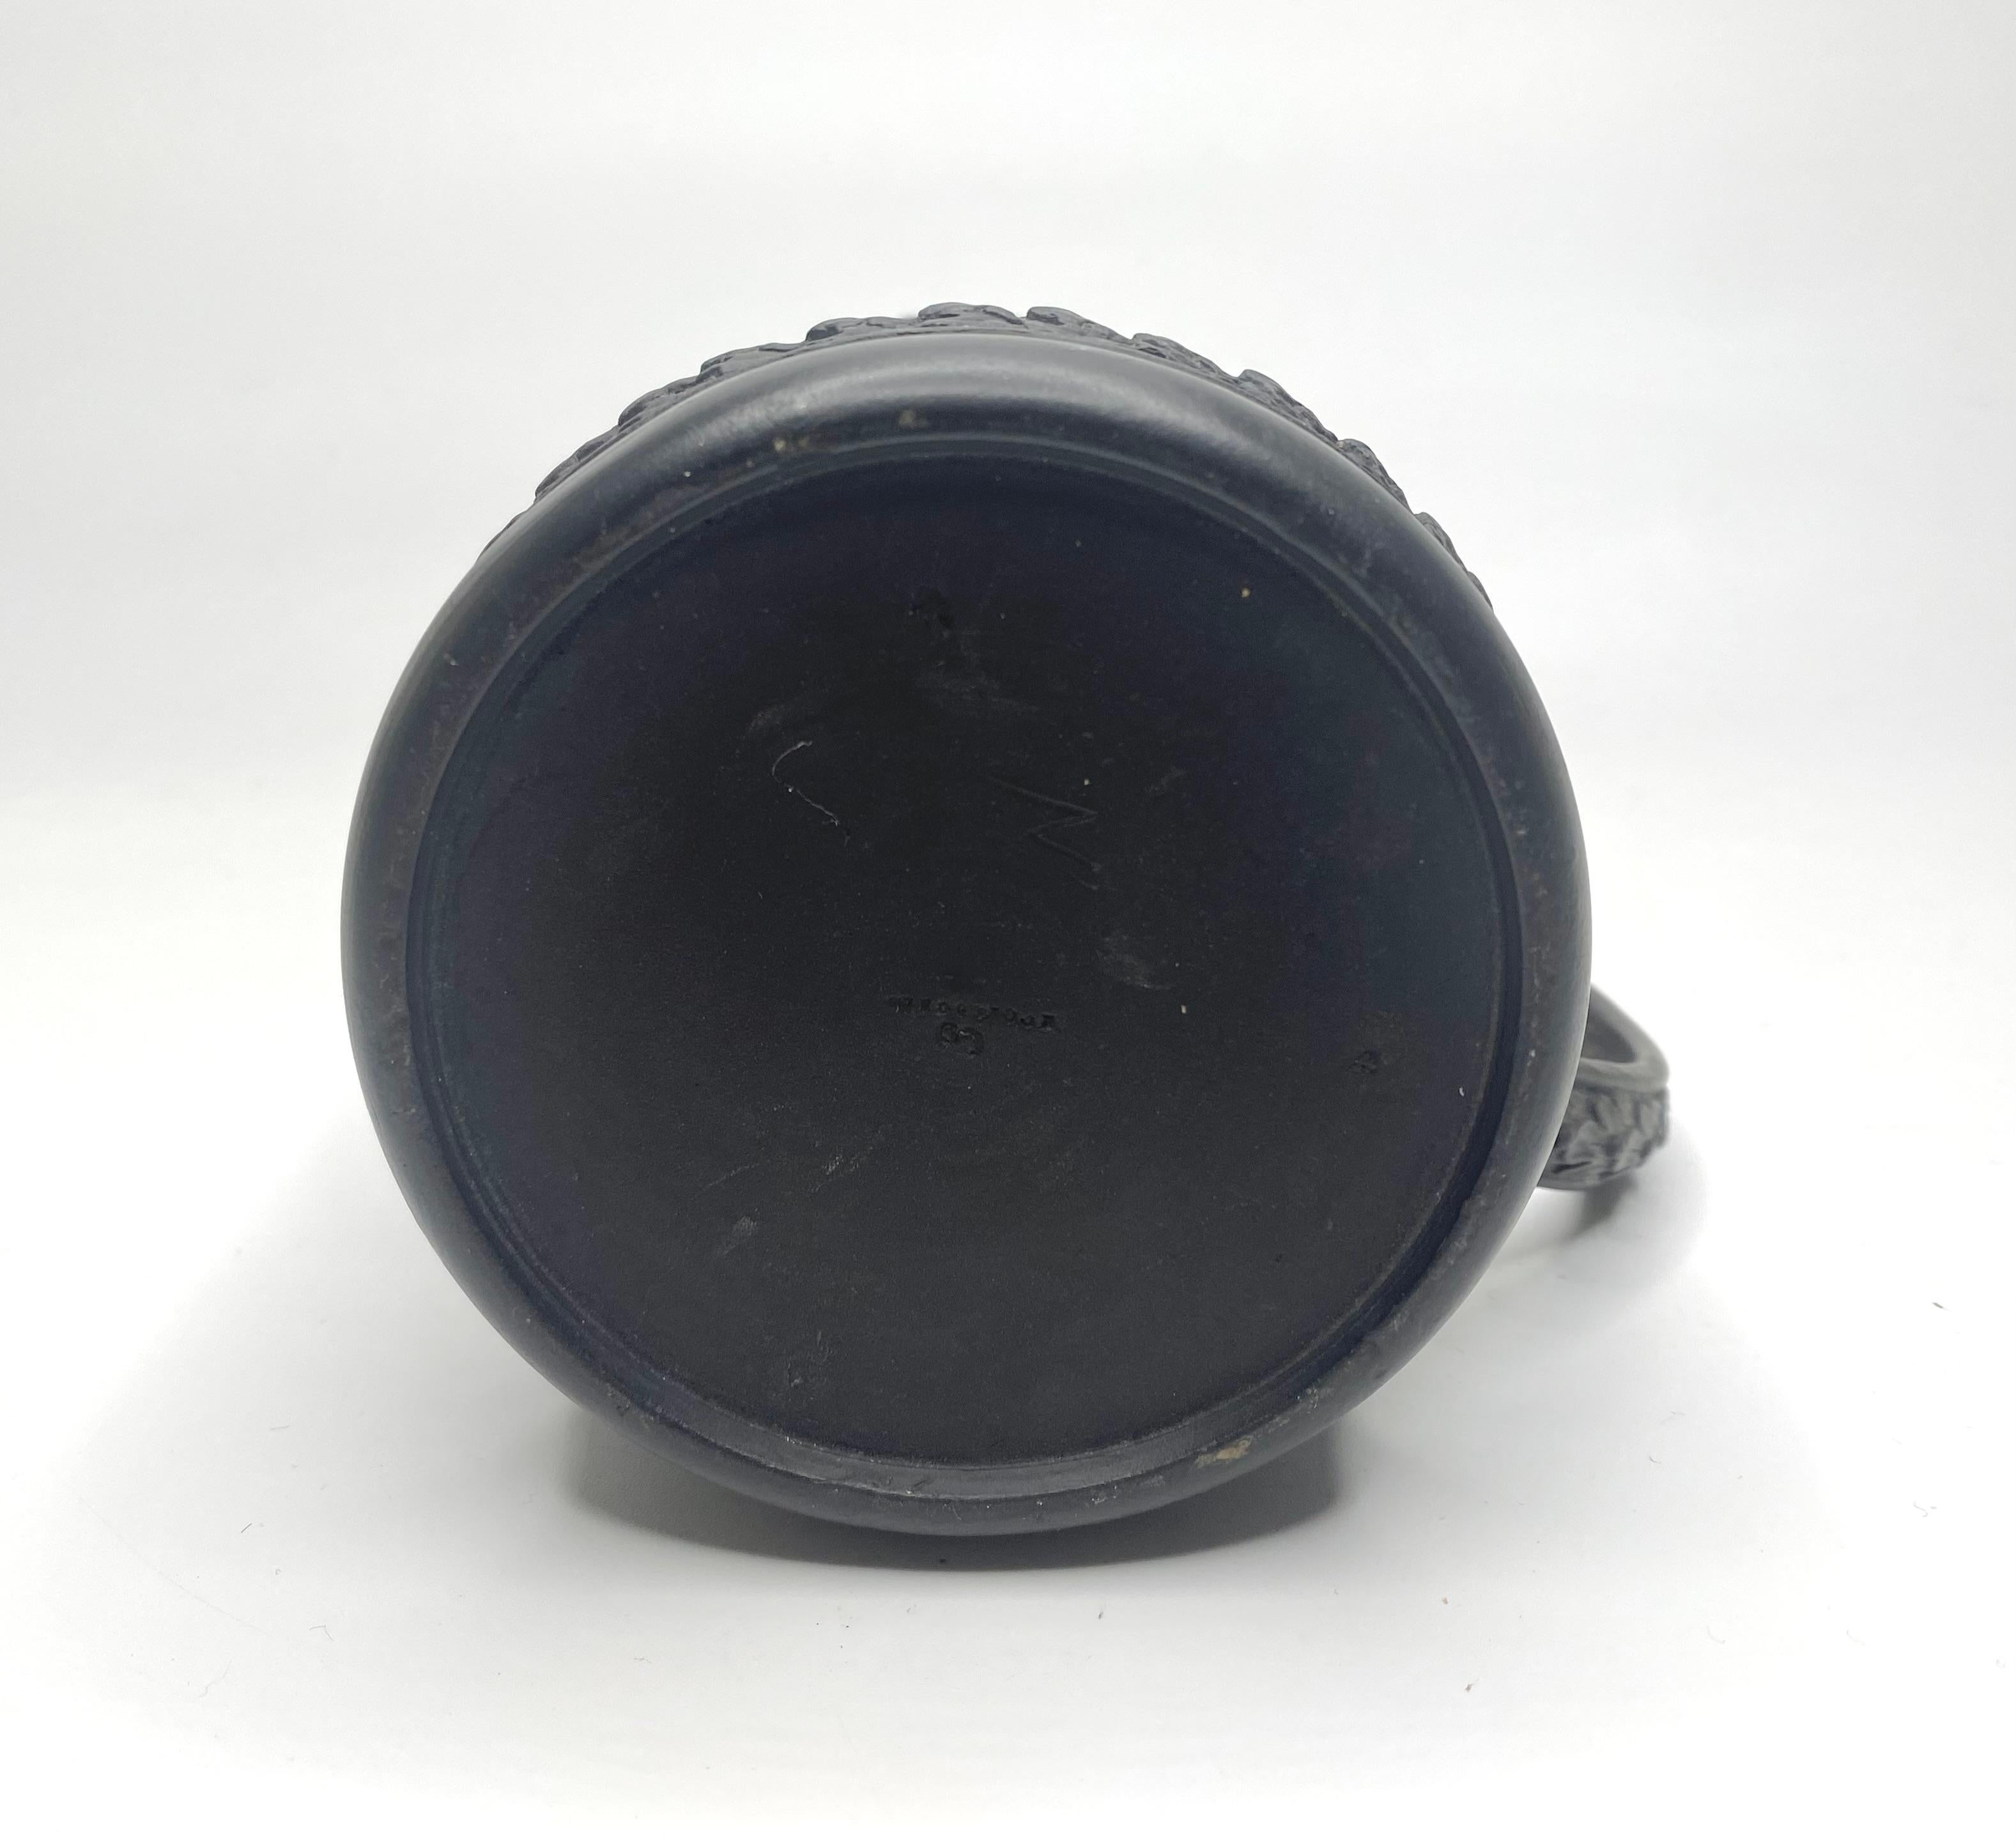 Pottery Wedgwood black basalt mug, silver mounted, 1808.